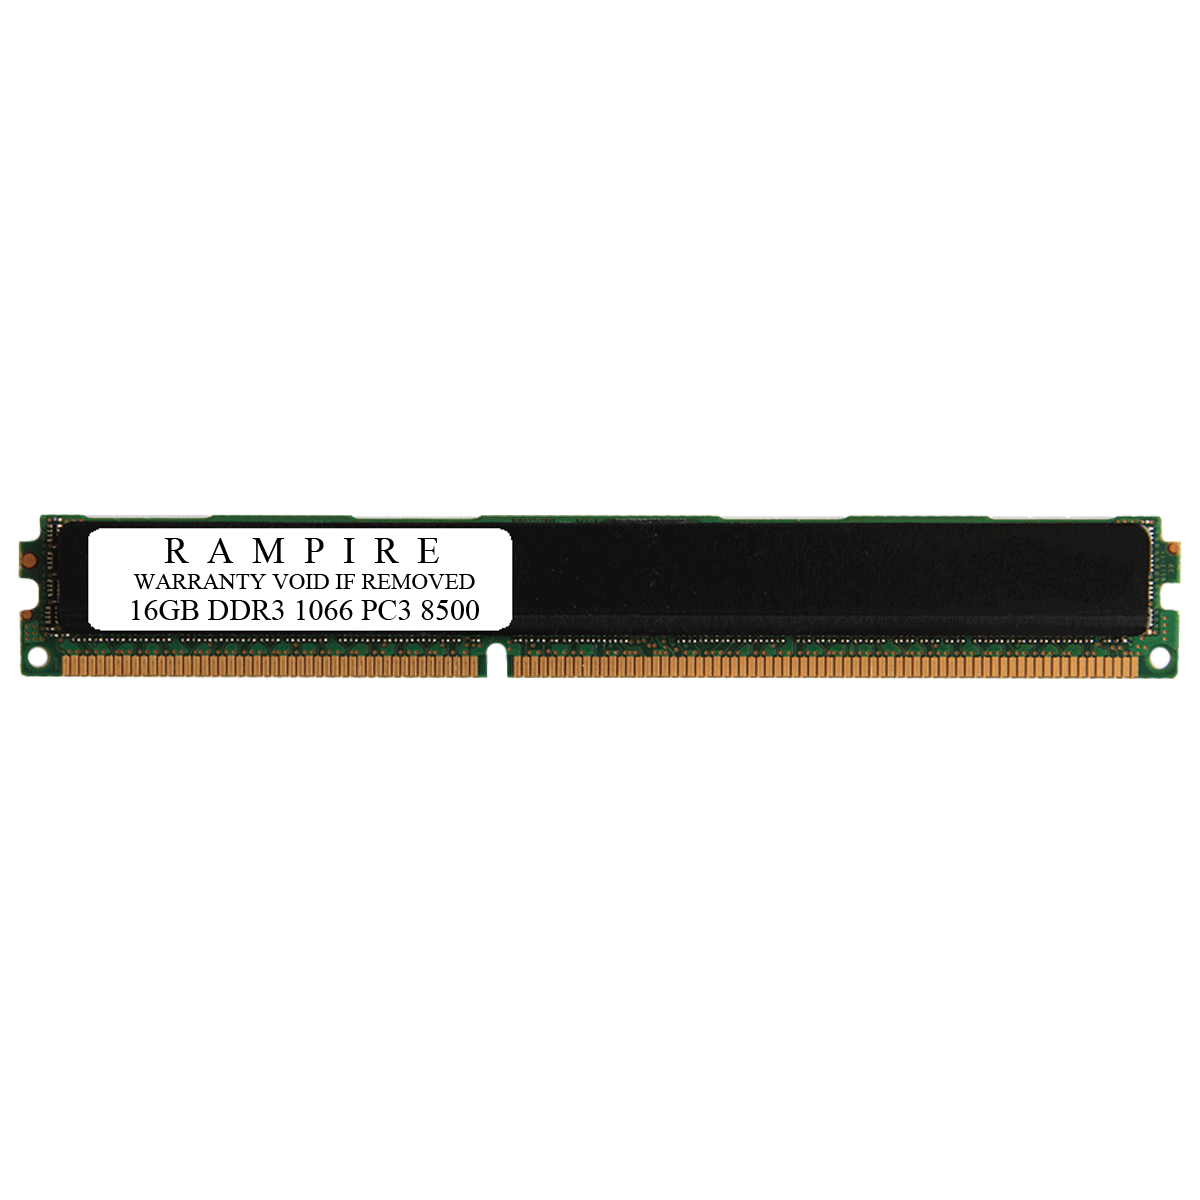 RAMPIRE 16GB DDR3 1066 (PC3 8500) 240-Pin SDRAM 4Rx4 VLP (Low Profile) 1.35V ECC Registered Server Memory